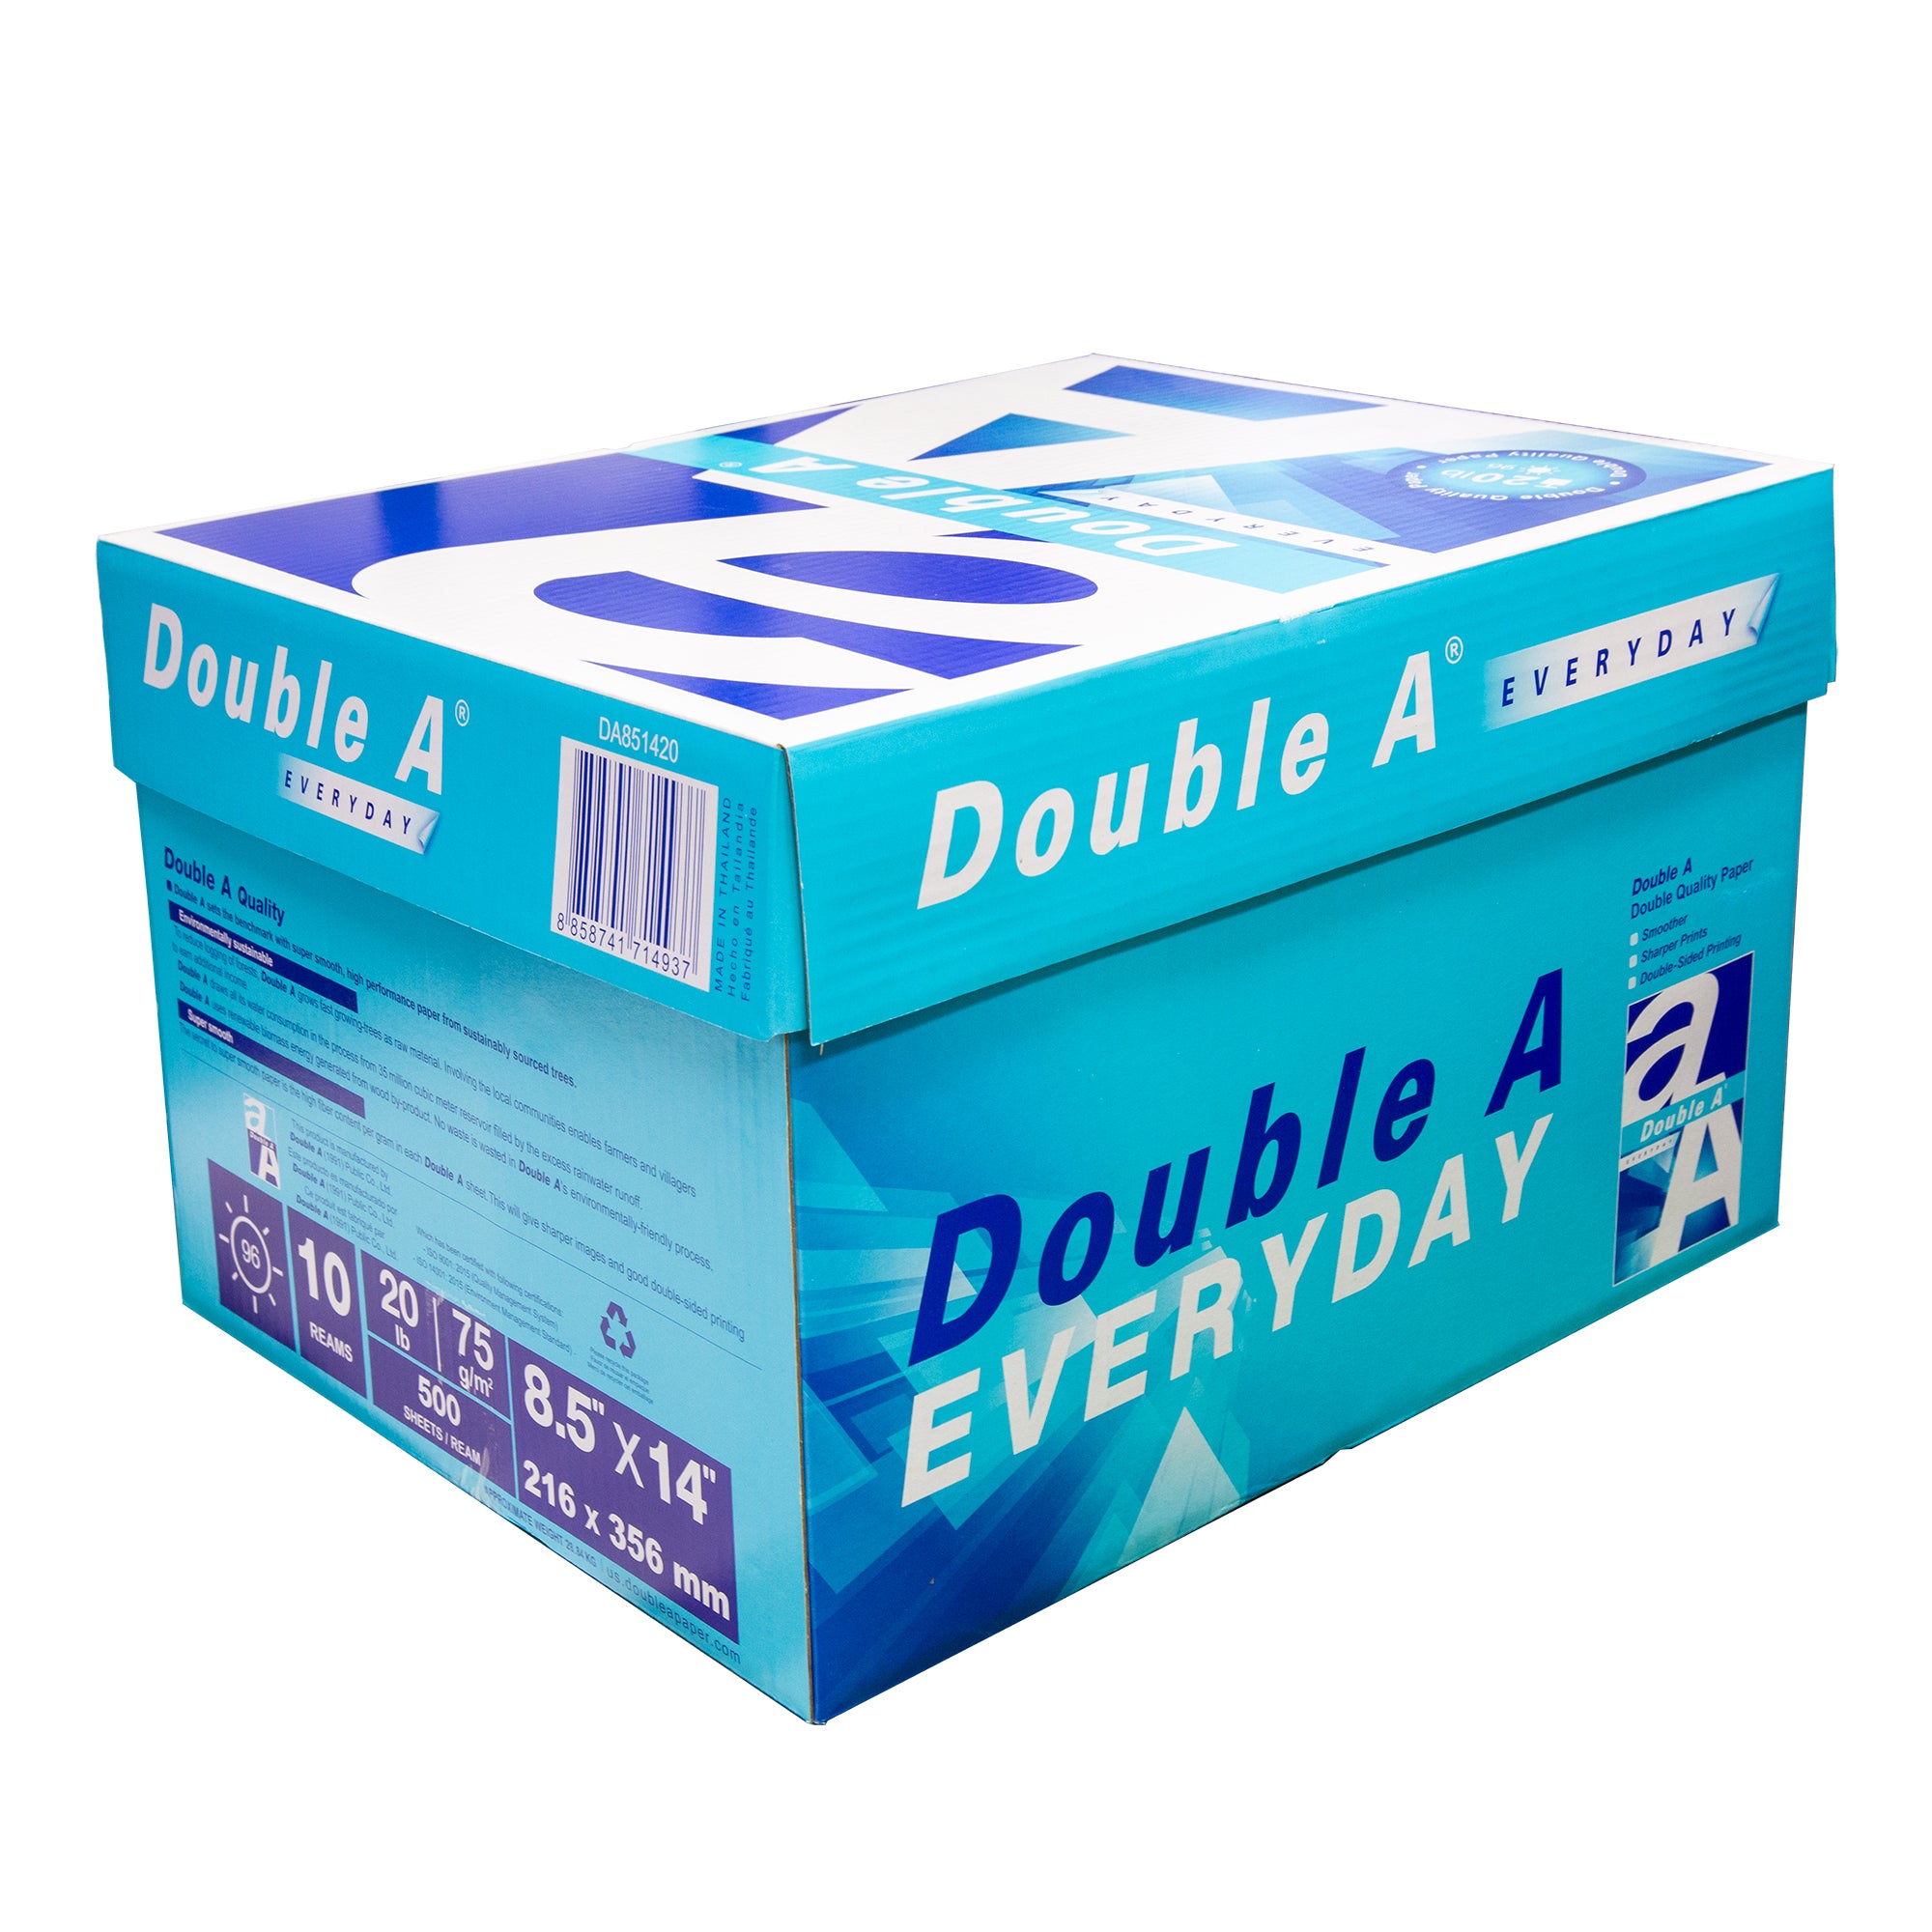 Double A (96) 8.5 x 14 Legal Size Copy Paper (1 Ream)